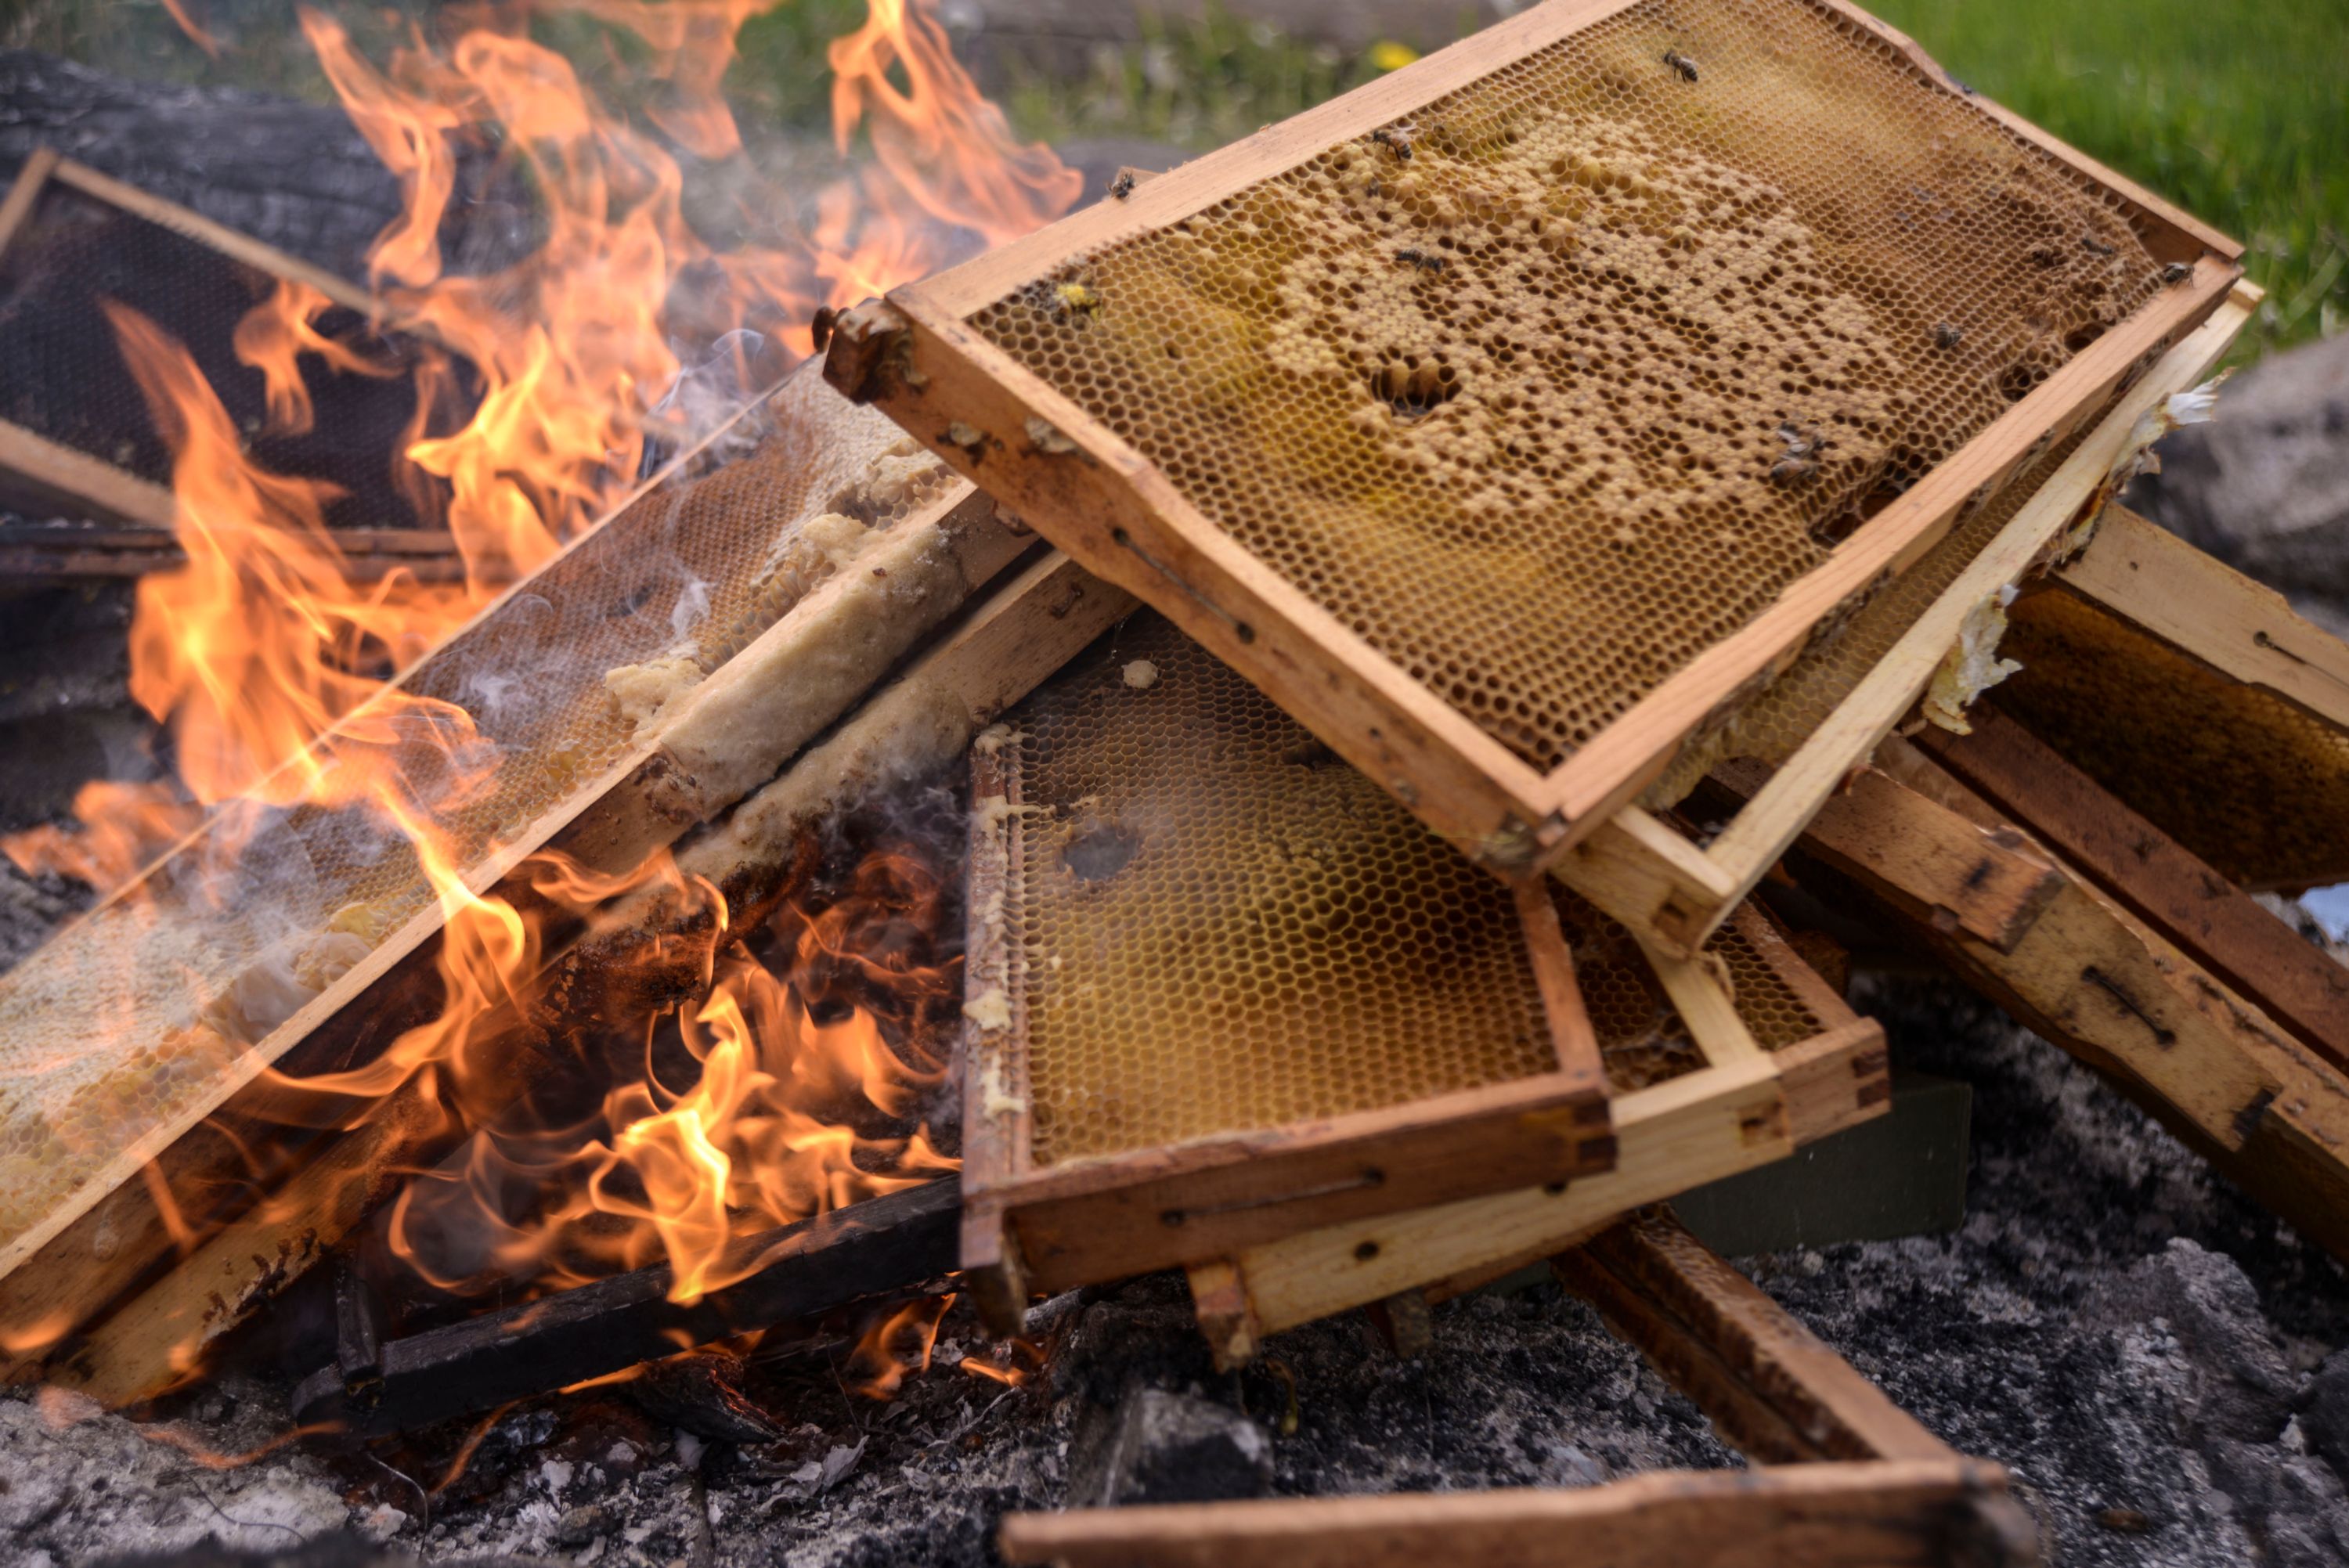 beekeeping equipment in flames